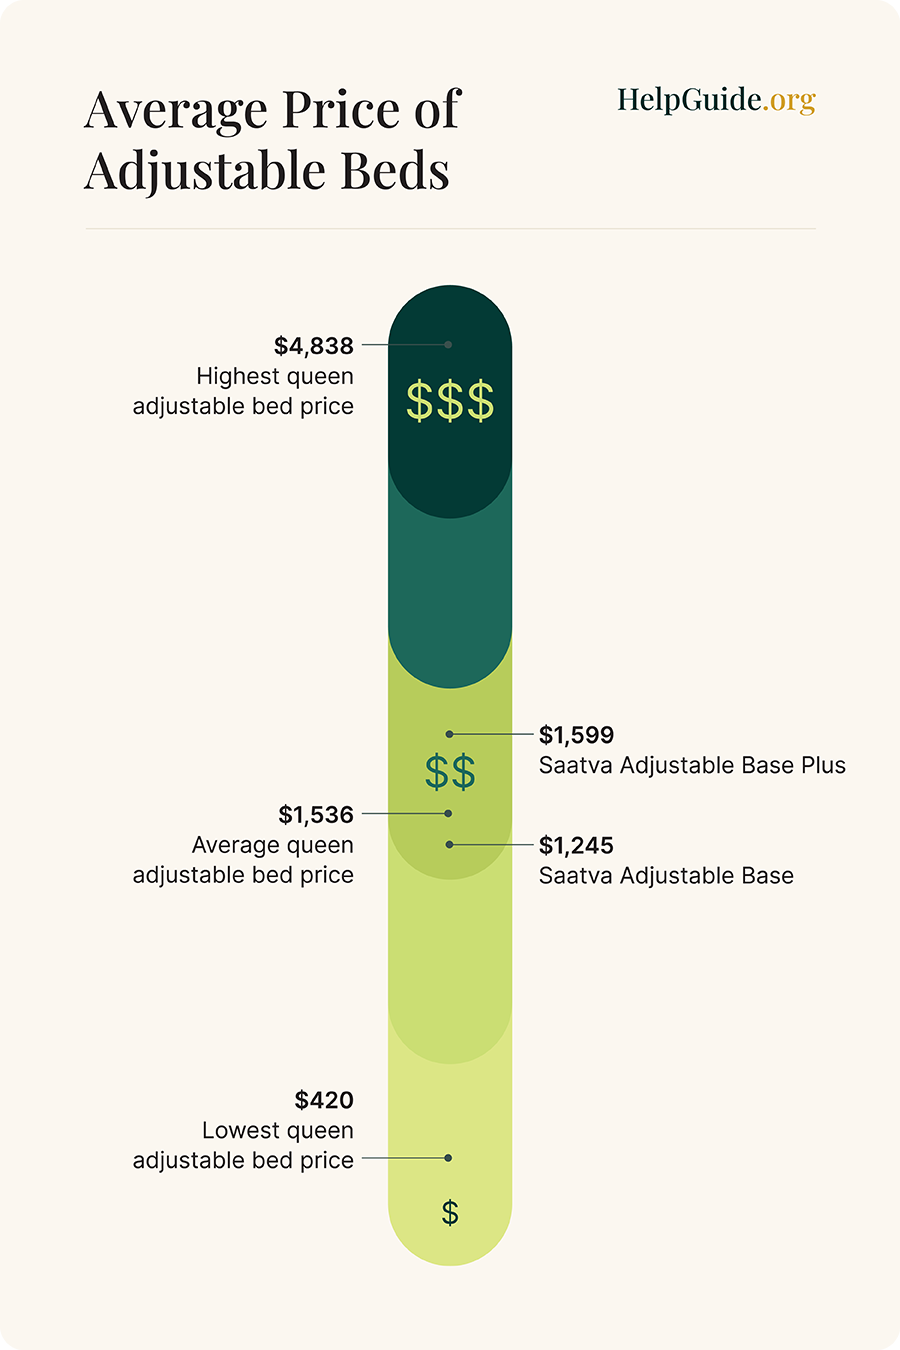 Average price of adjustable beds compared to Saatva adjustable beds